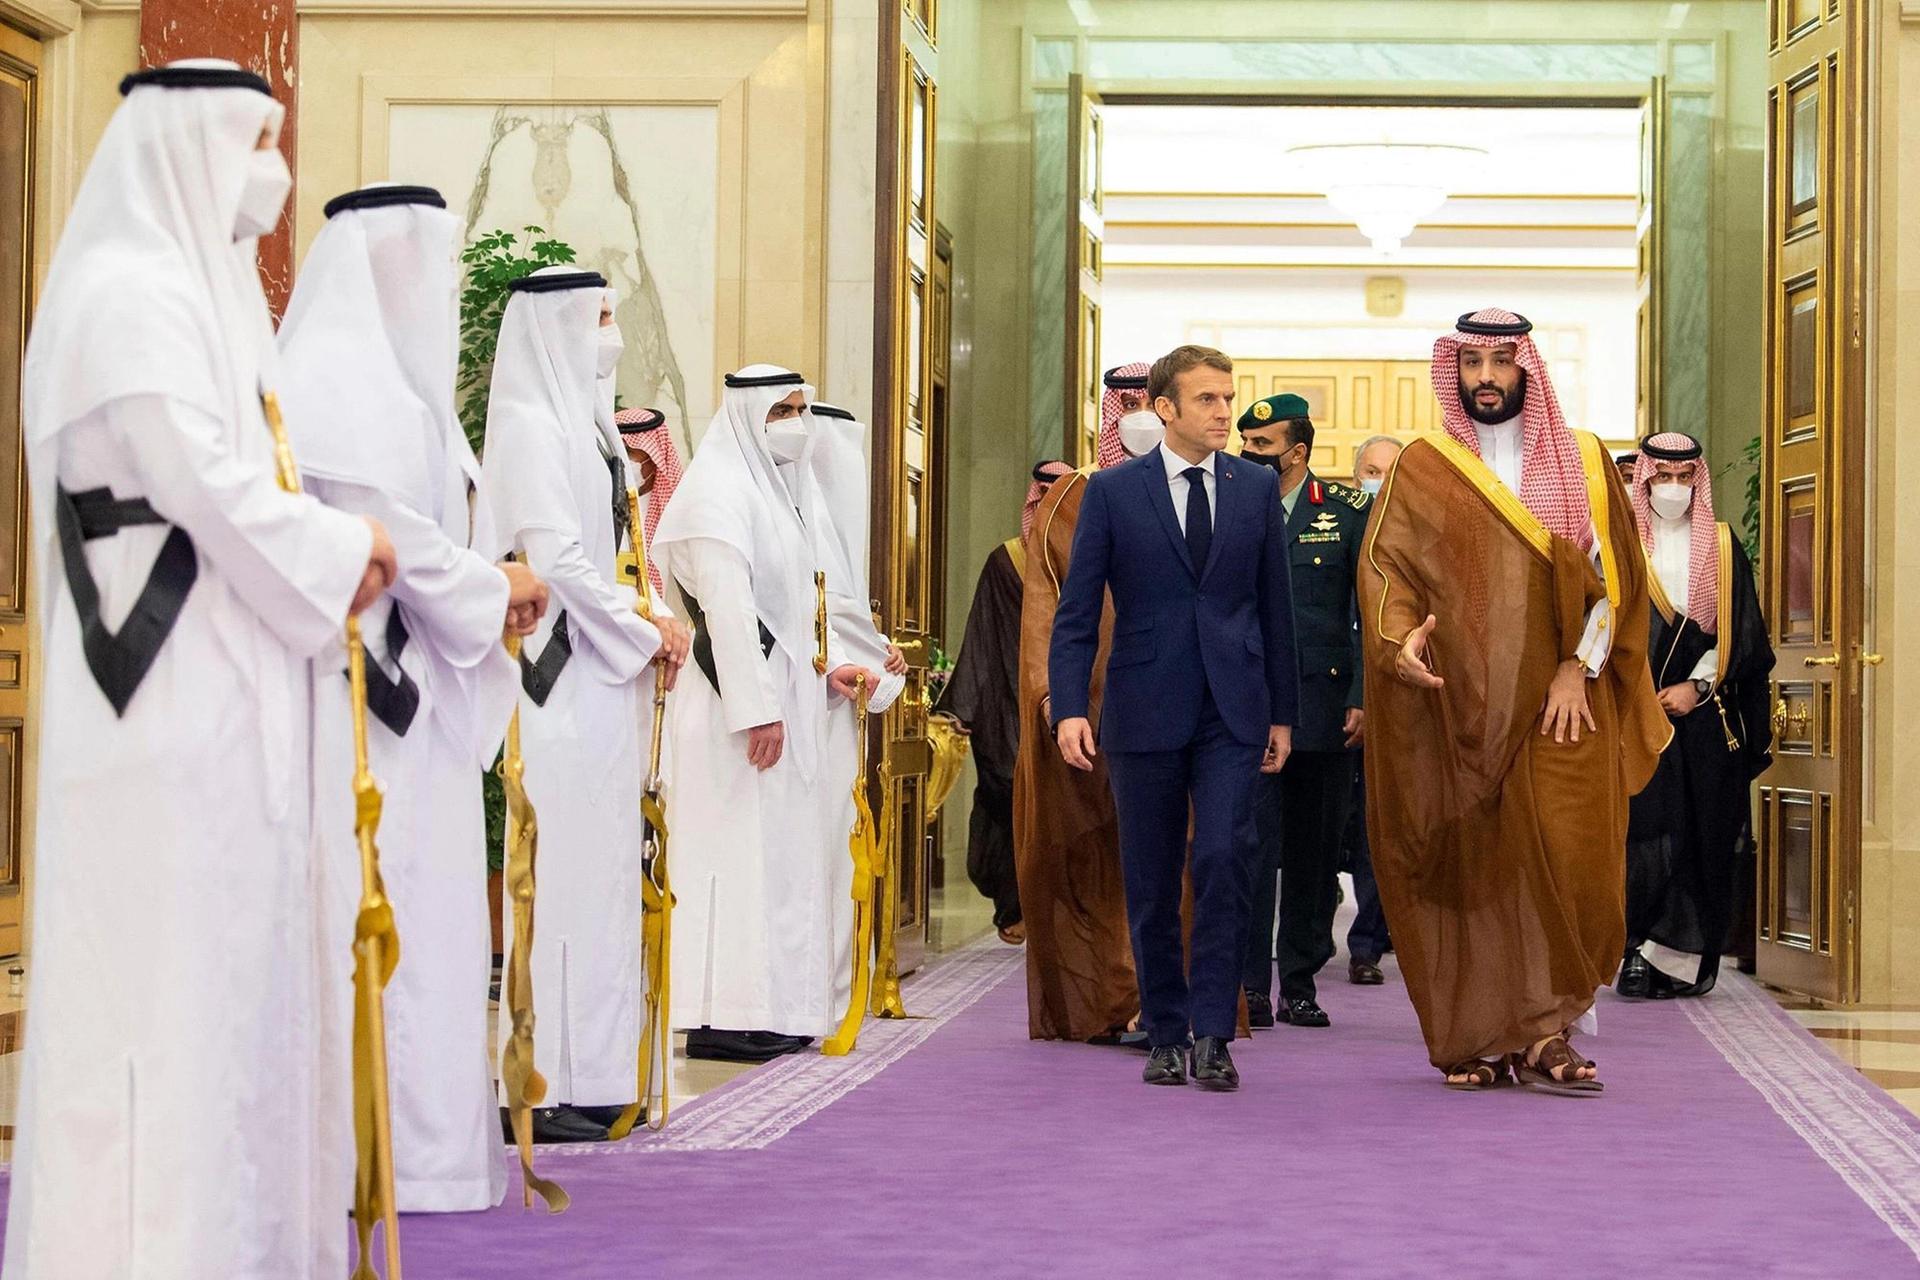 French president Emmanuel Macron meets the Saudi Crown Prince Mohammed bin Salman Al Saud at the Royal Palace in Jeddah on 4 December Photo: Abaca Press/Alamy